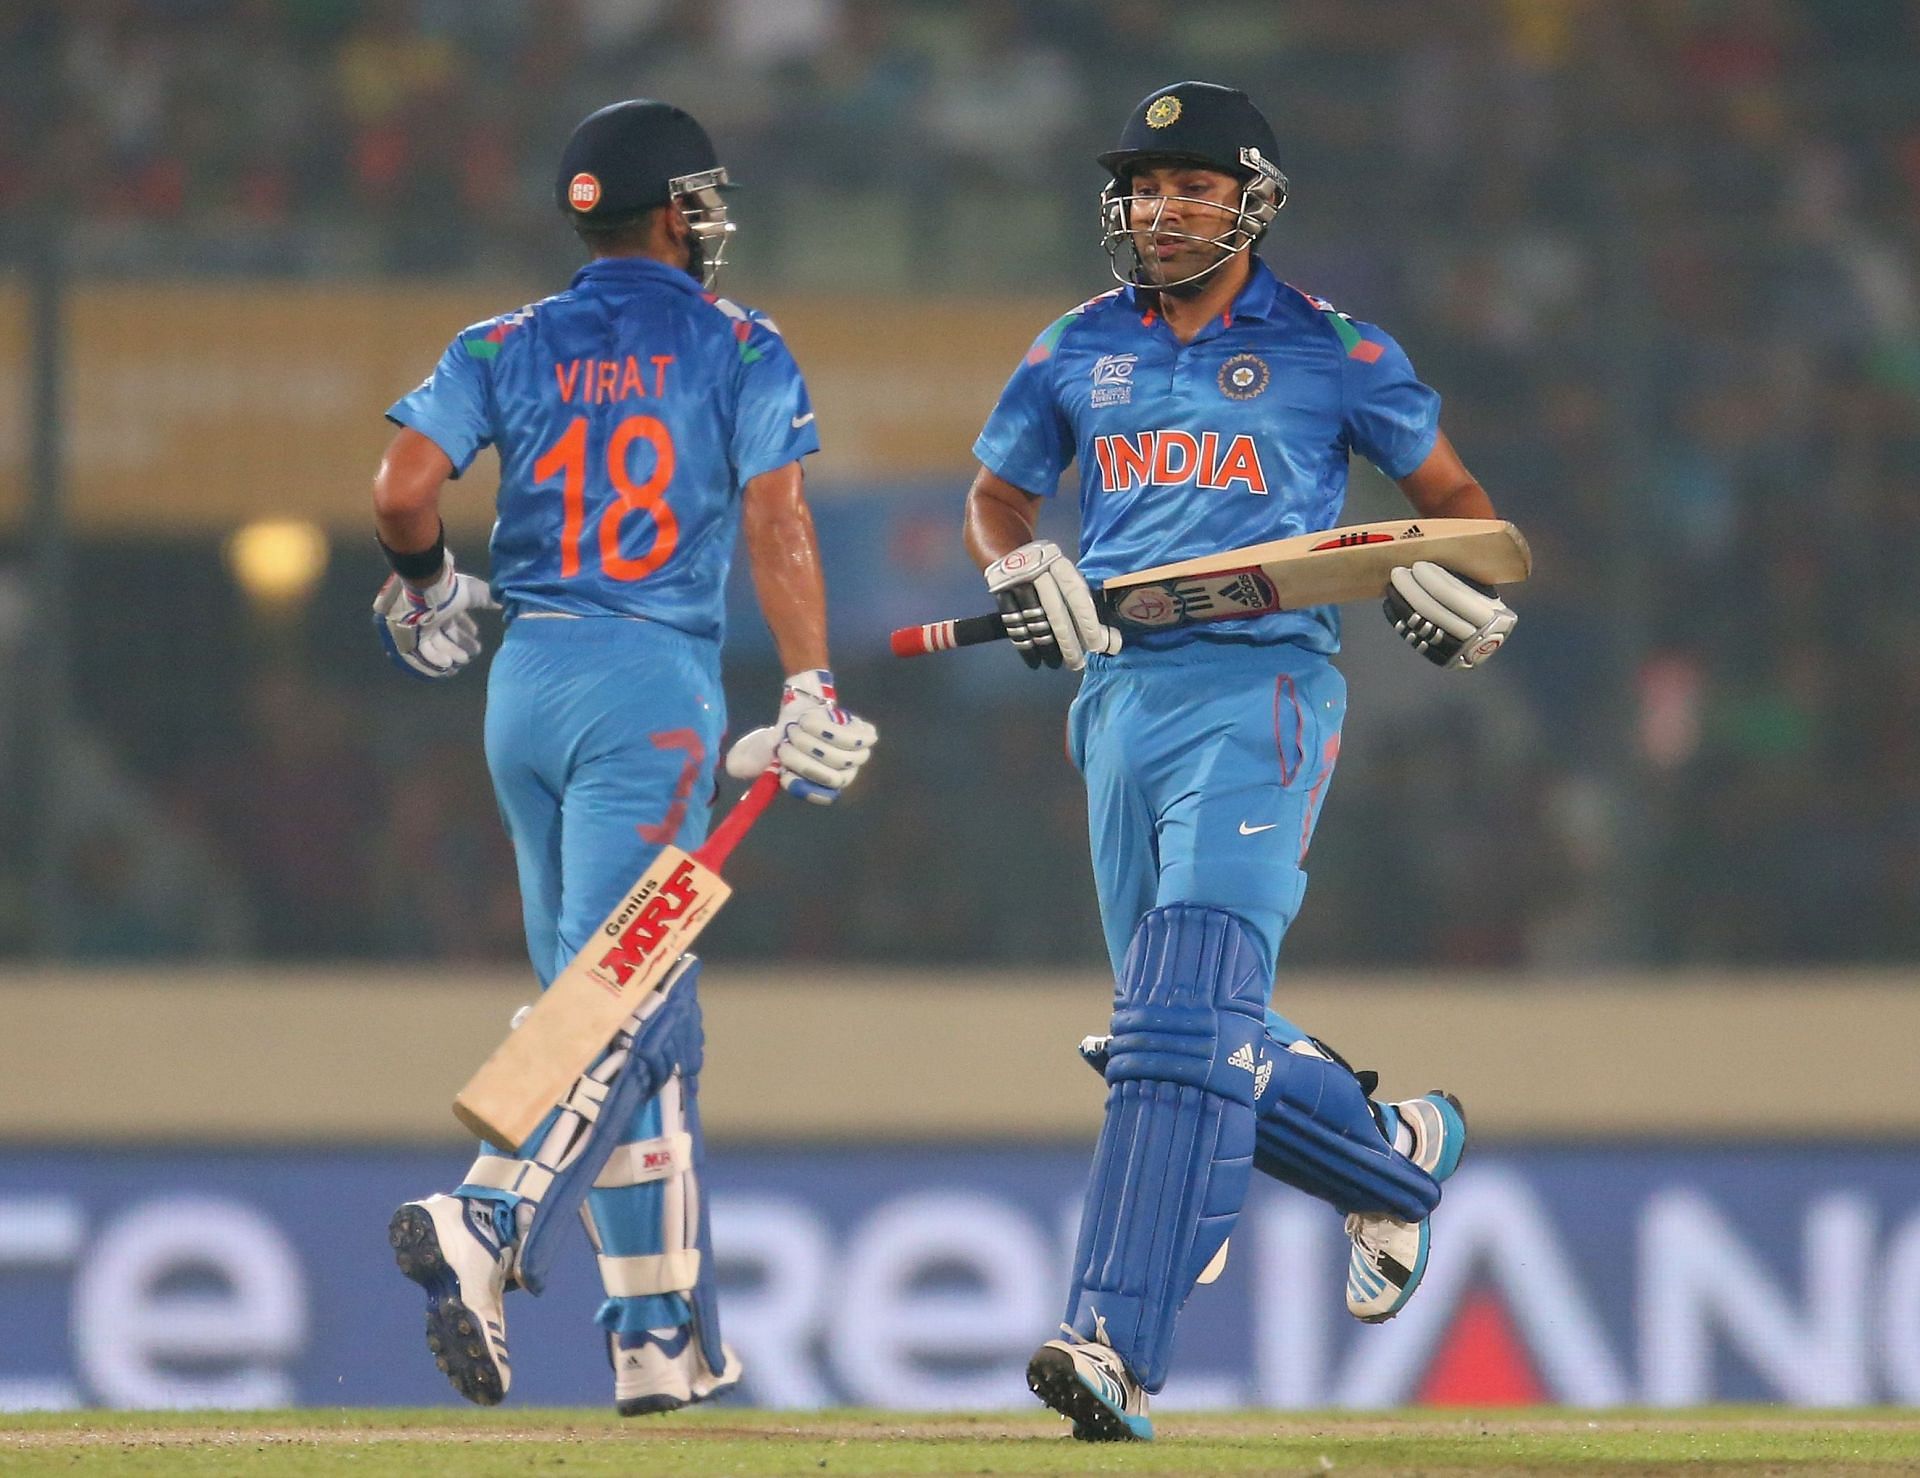 Virat Kohli and Rohit Sharma batting together.